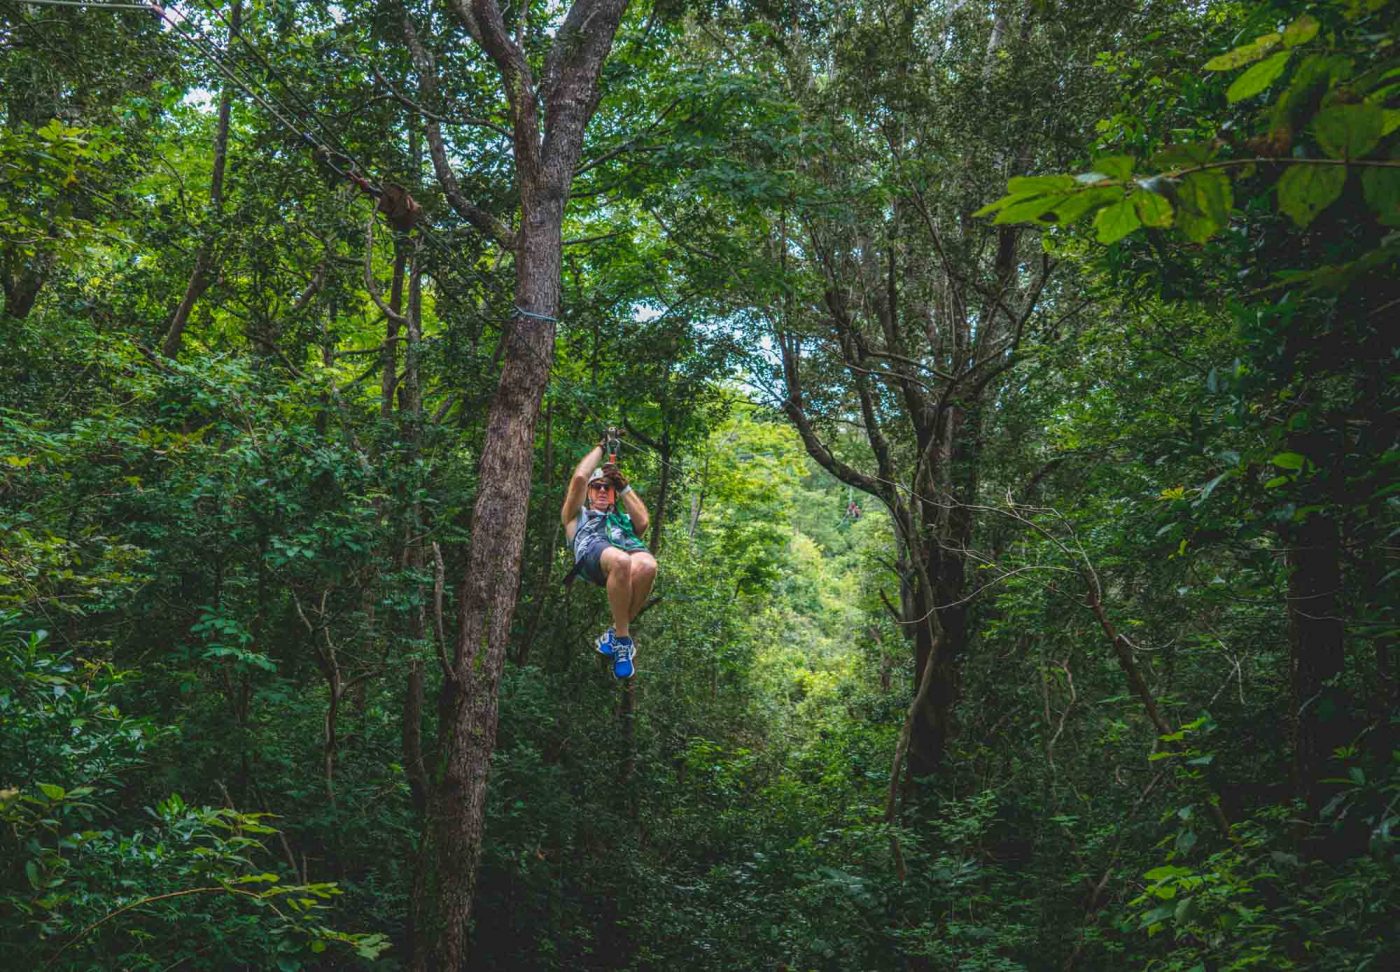 Zip lining thru Rincon de la Vieja National Park in Guachipelin Costa Rica